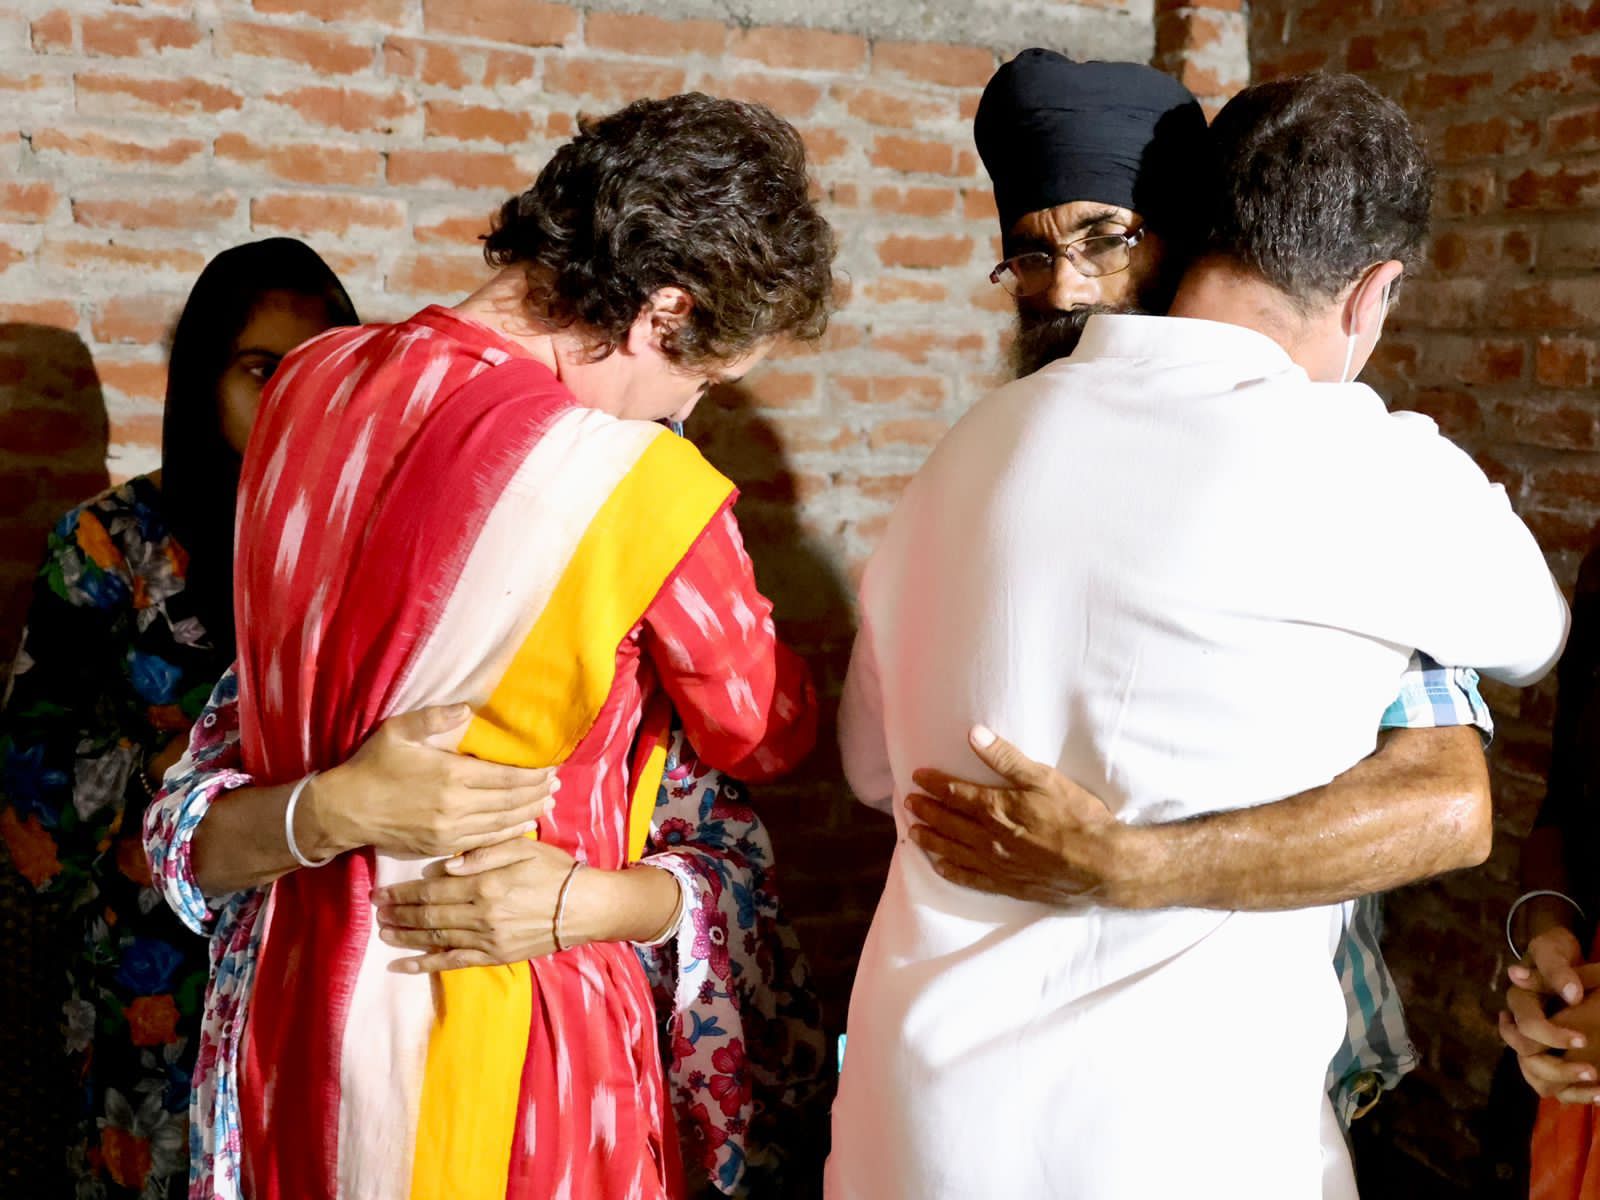 Rahul Gandhi and Priyanka Gandhi reached Lakhampur and met the victims